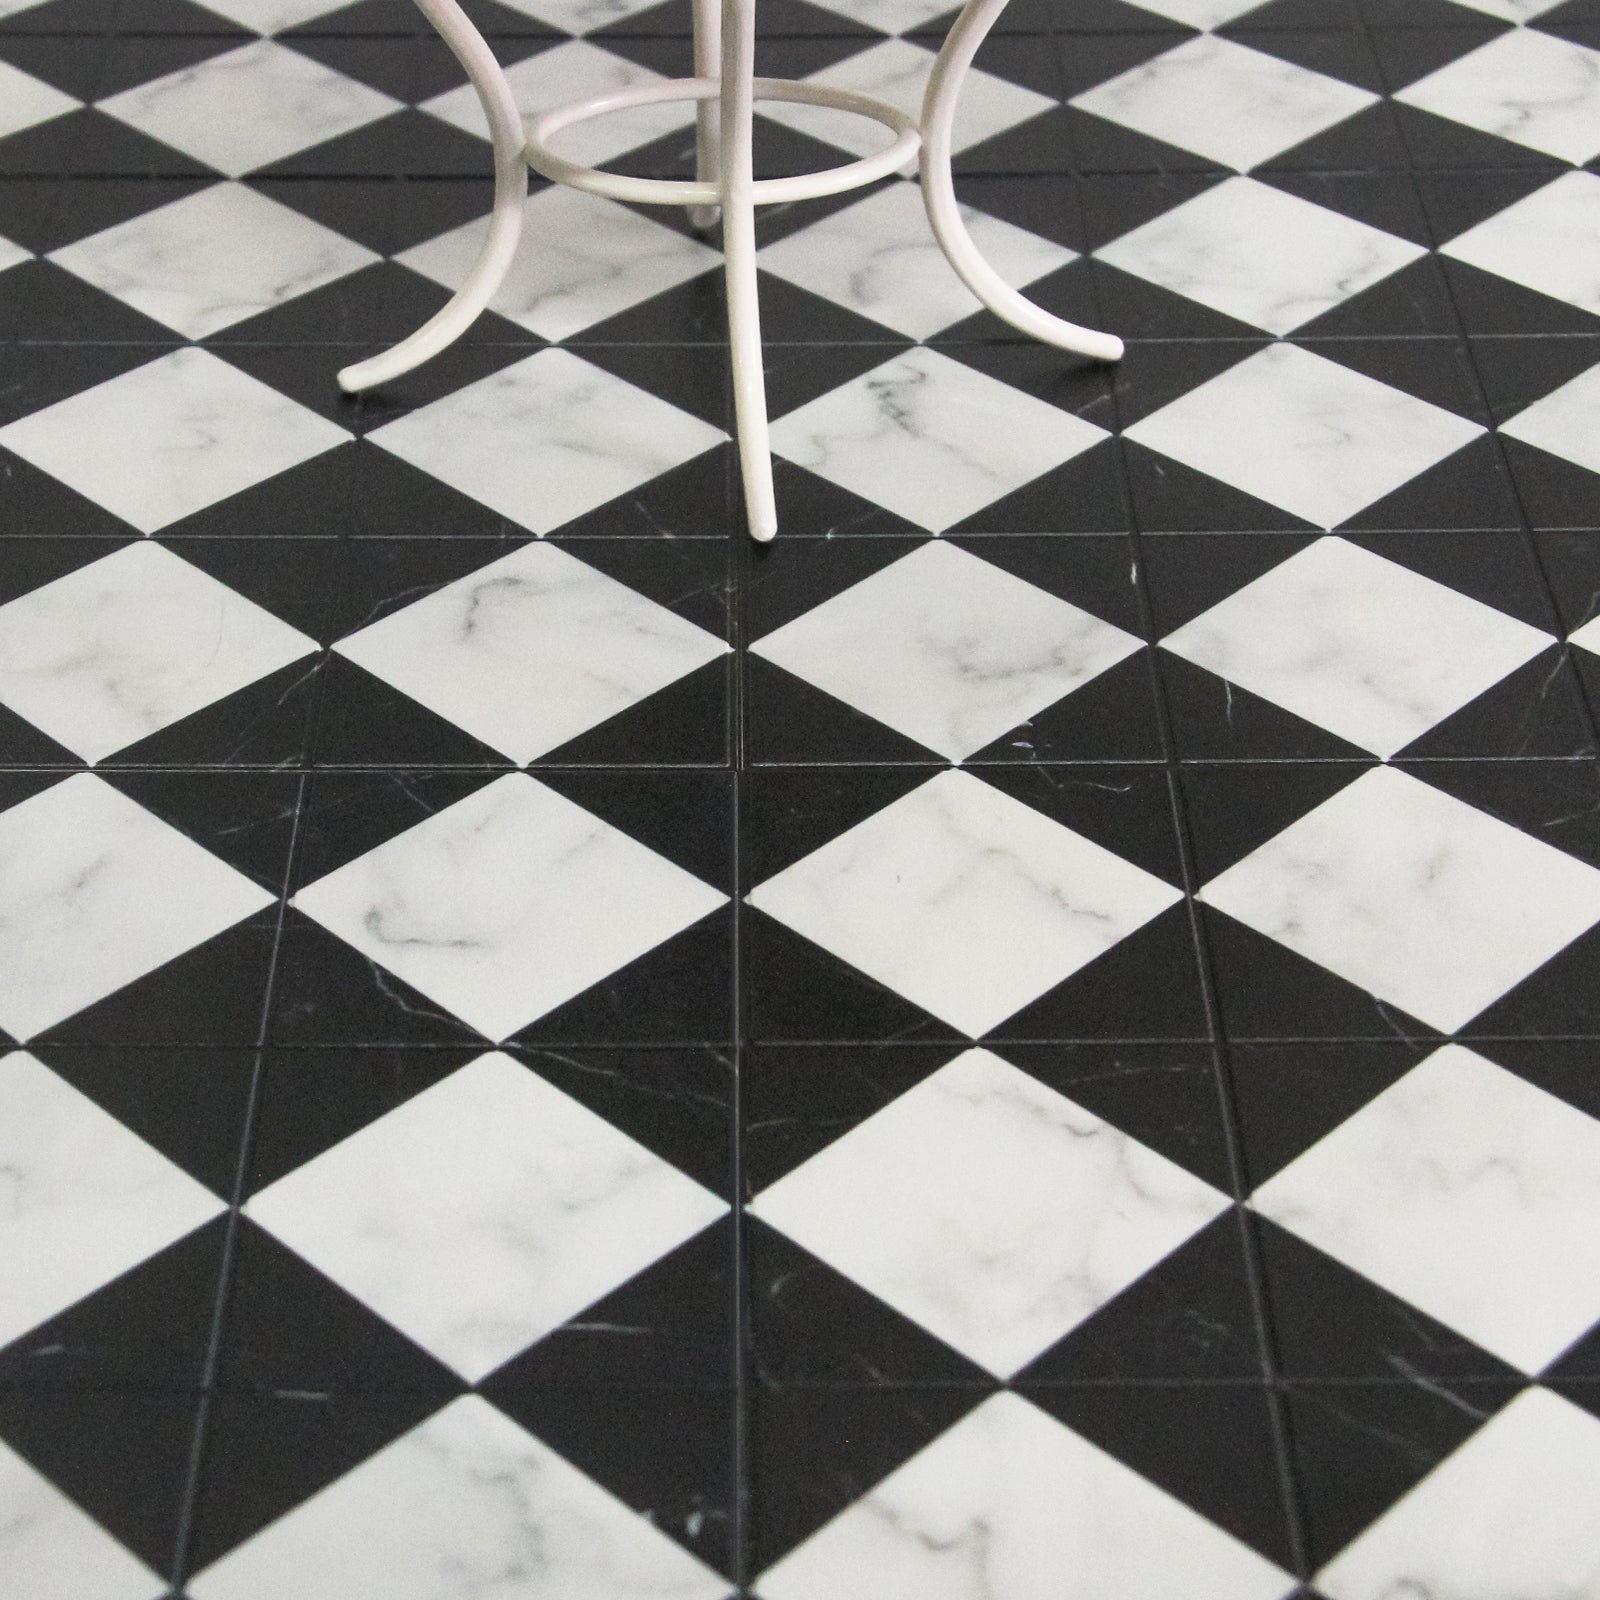 Double Side Floor-Black&White Floor Tile Dollhouse Miniature